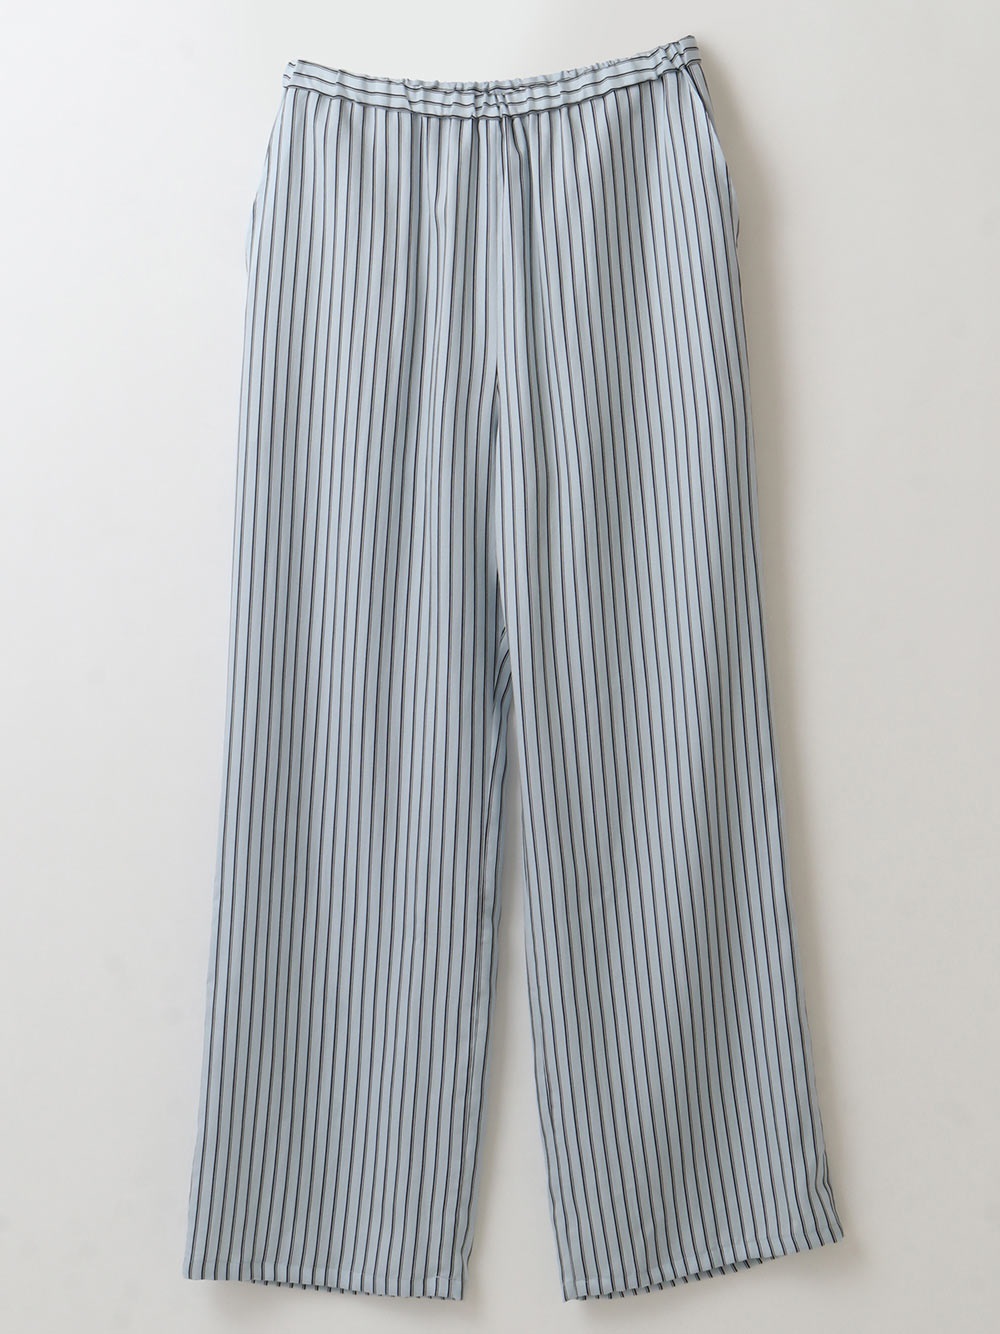 Stripe Lounge Pants(72サックスブルー-フリー)